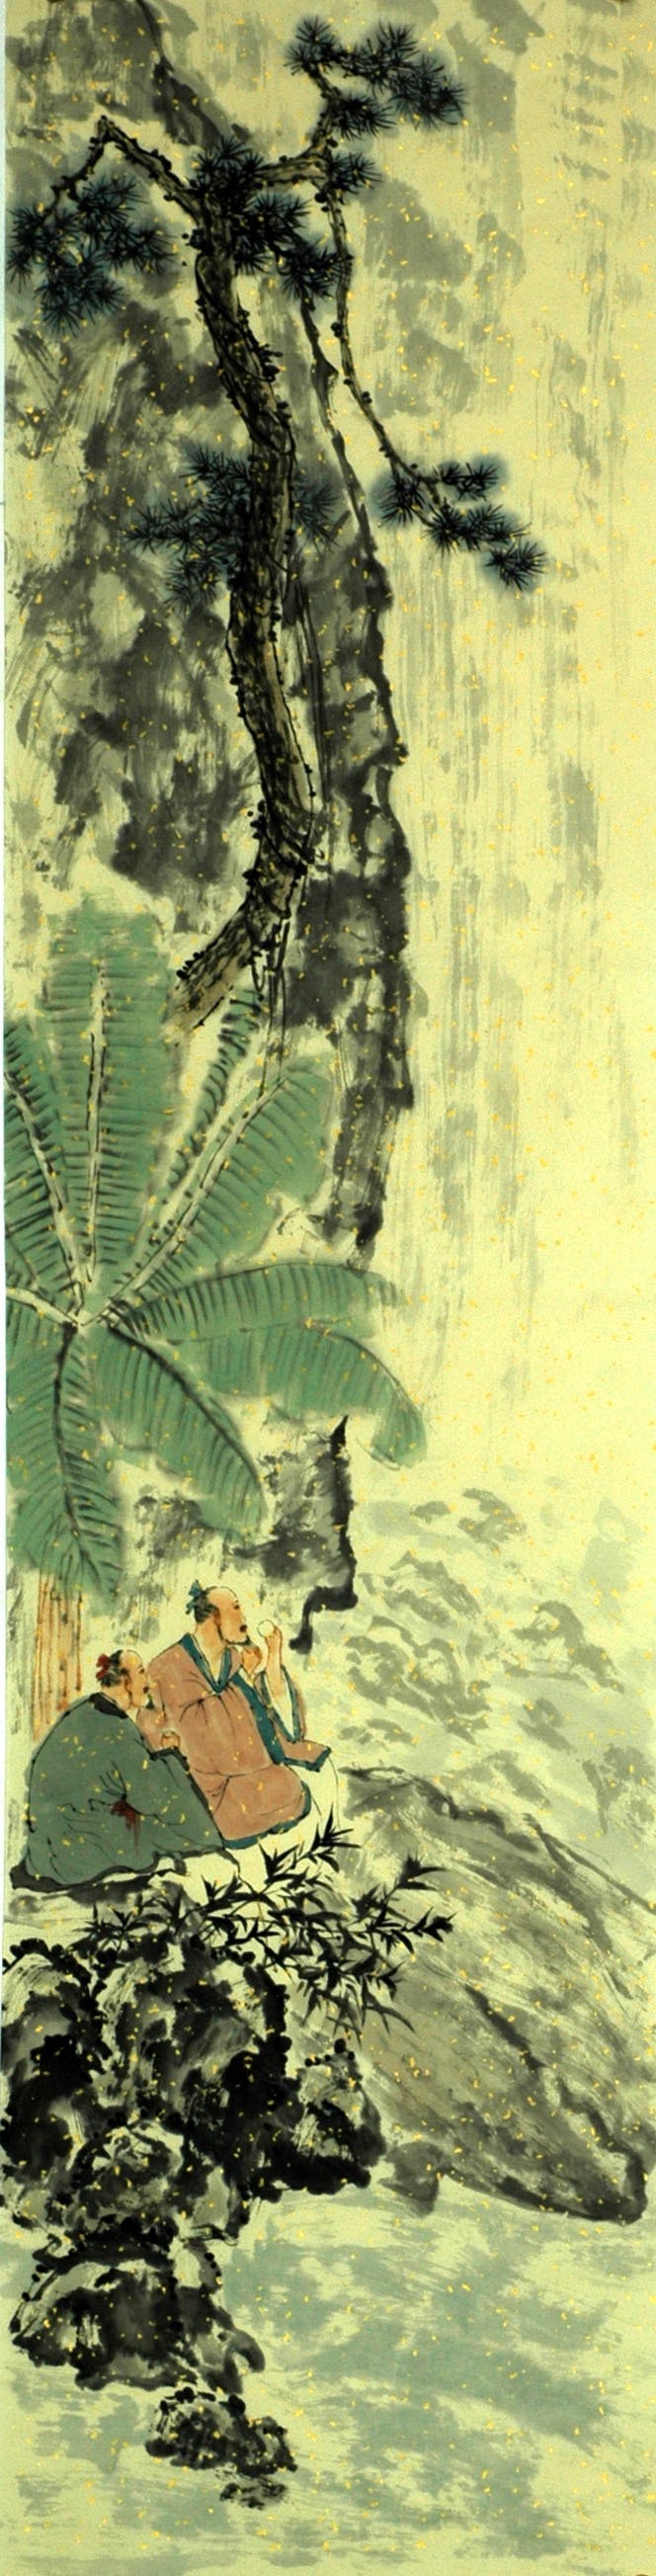 Chinese Figure Painting - CNAG007734